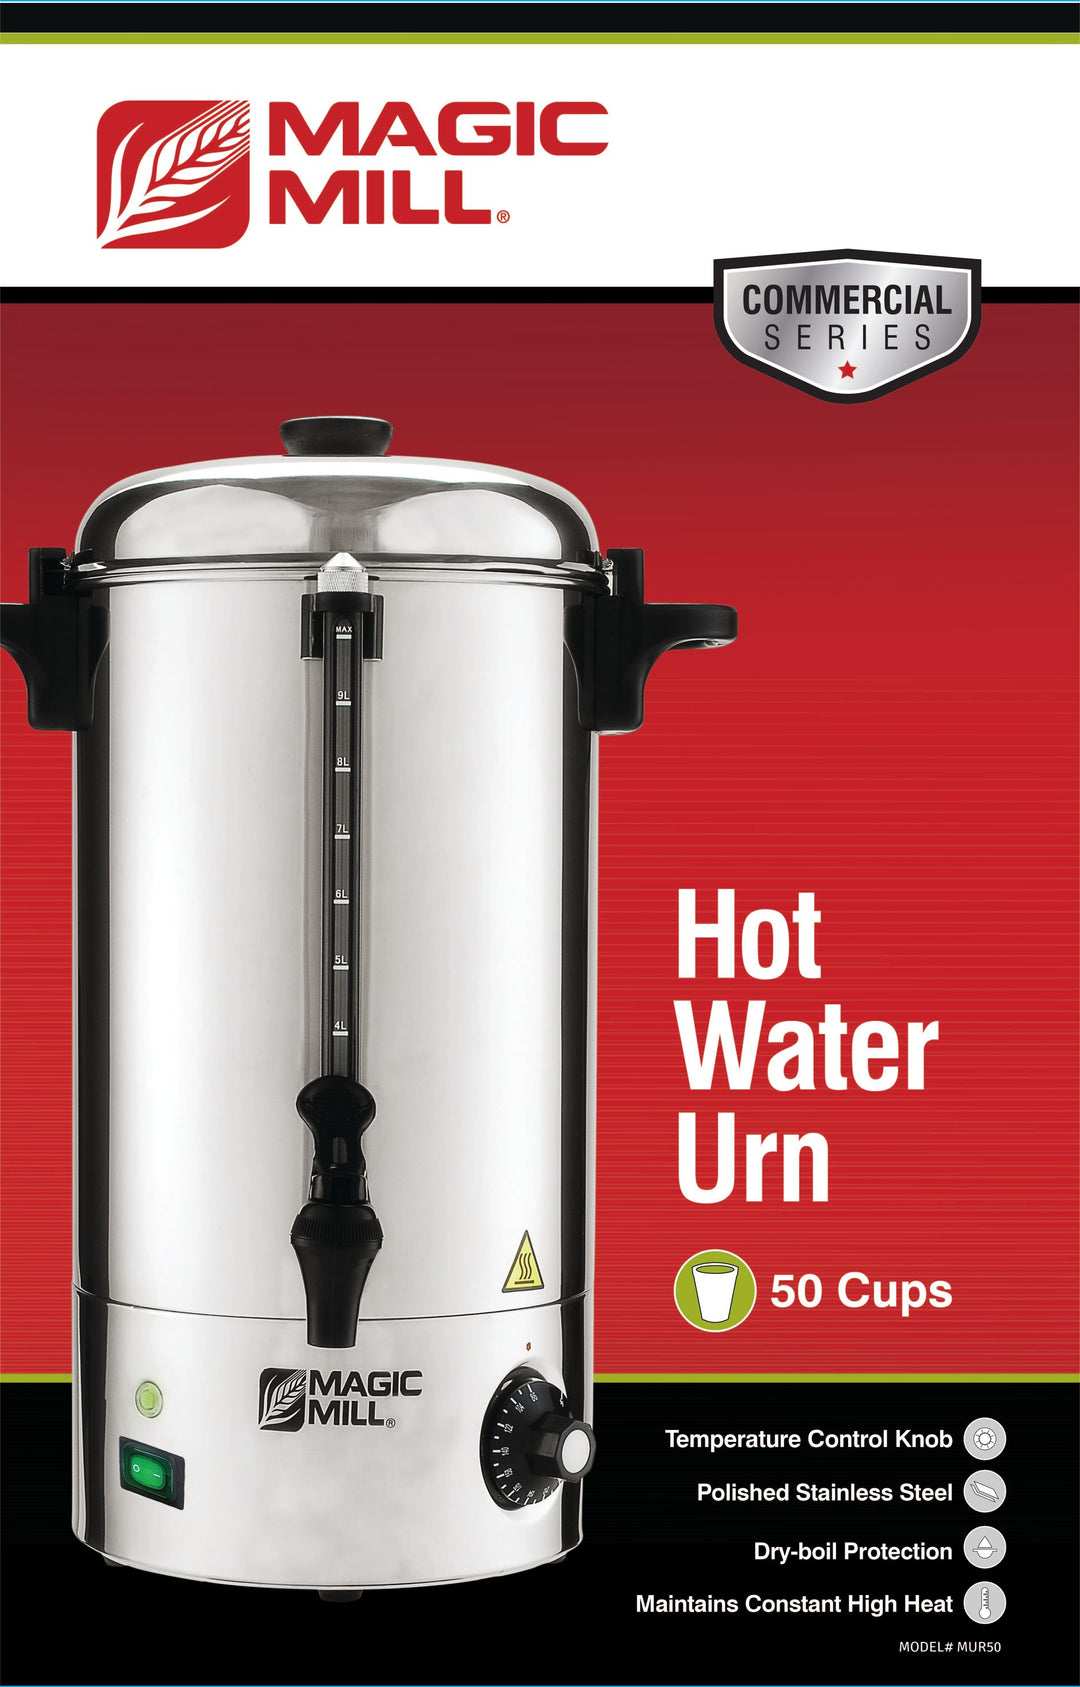 Hot Water Urn